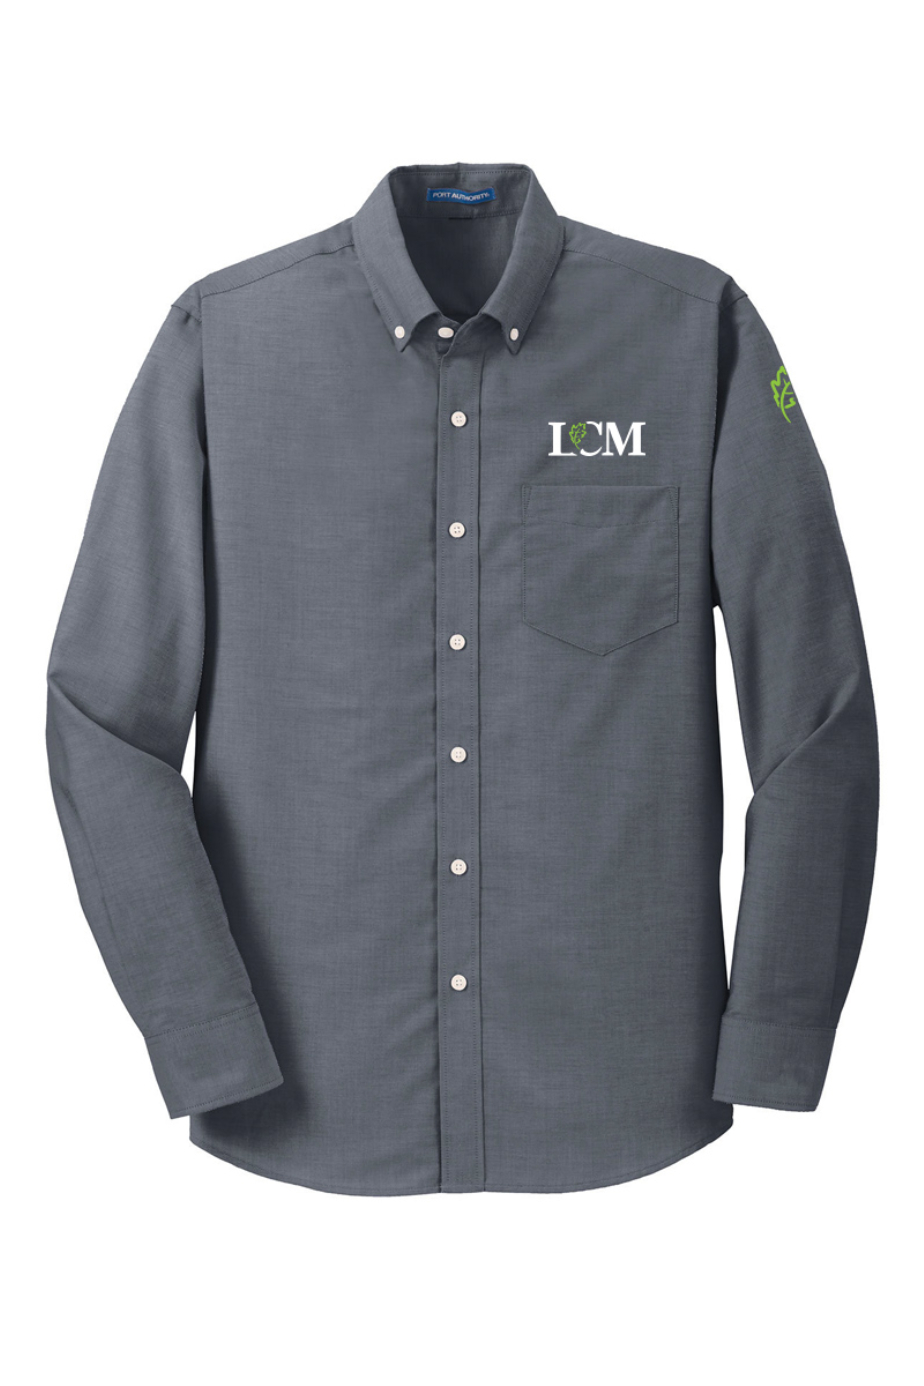 LCM  Port Authority SuperPro Oxford Shirt - S658